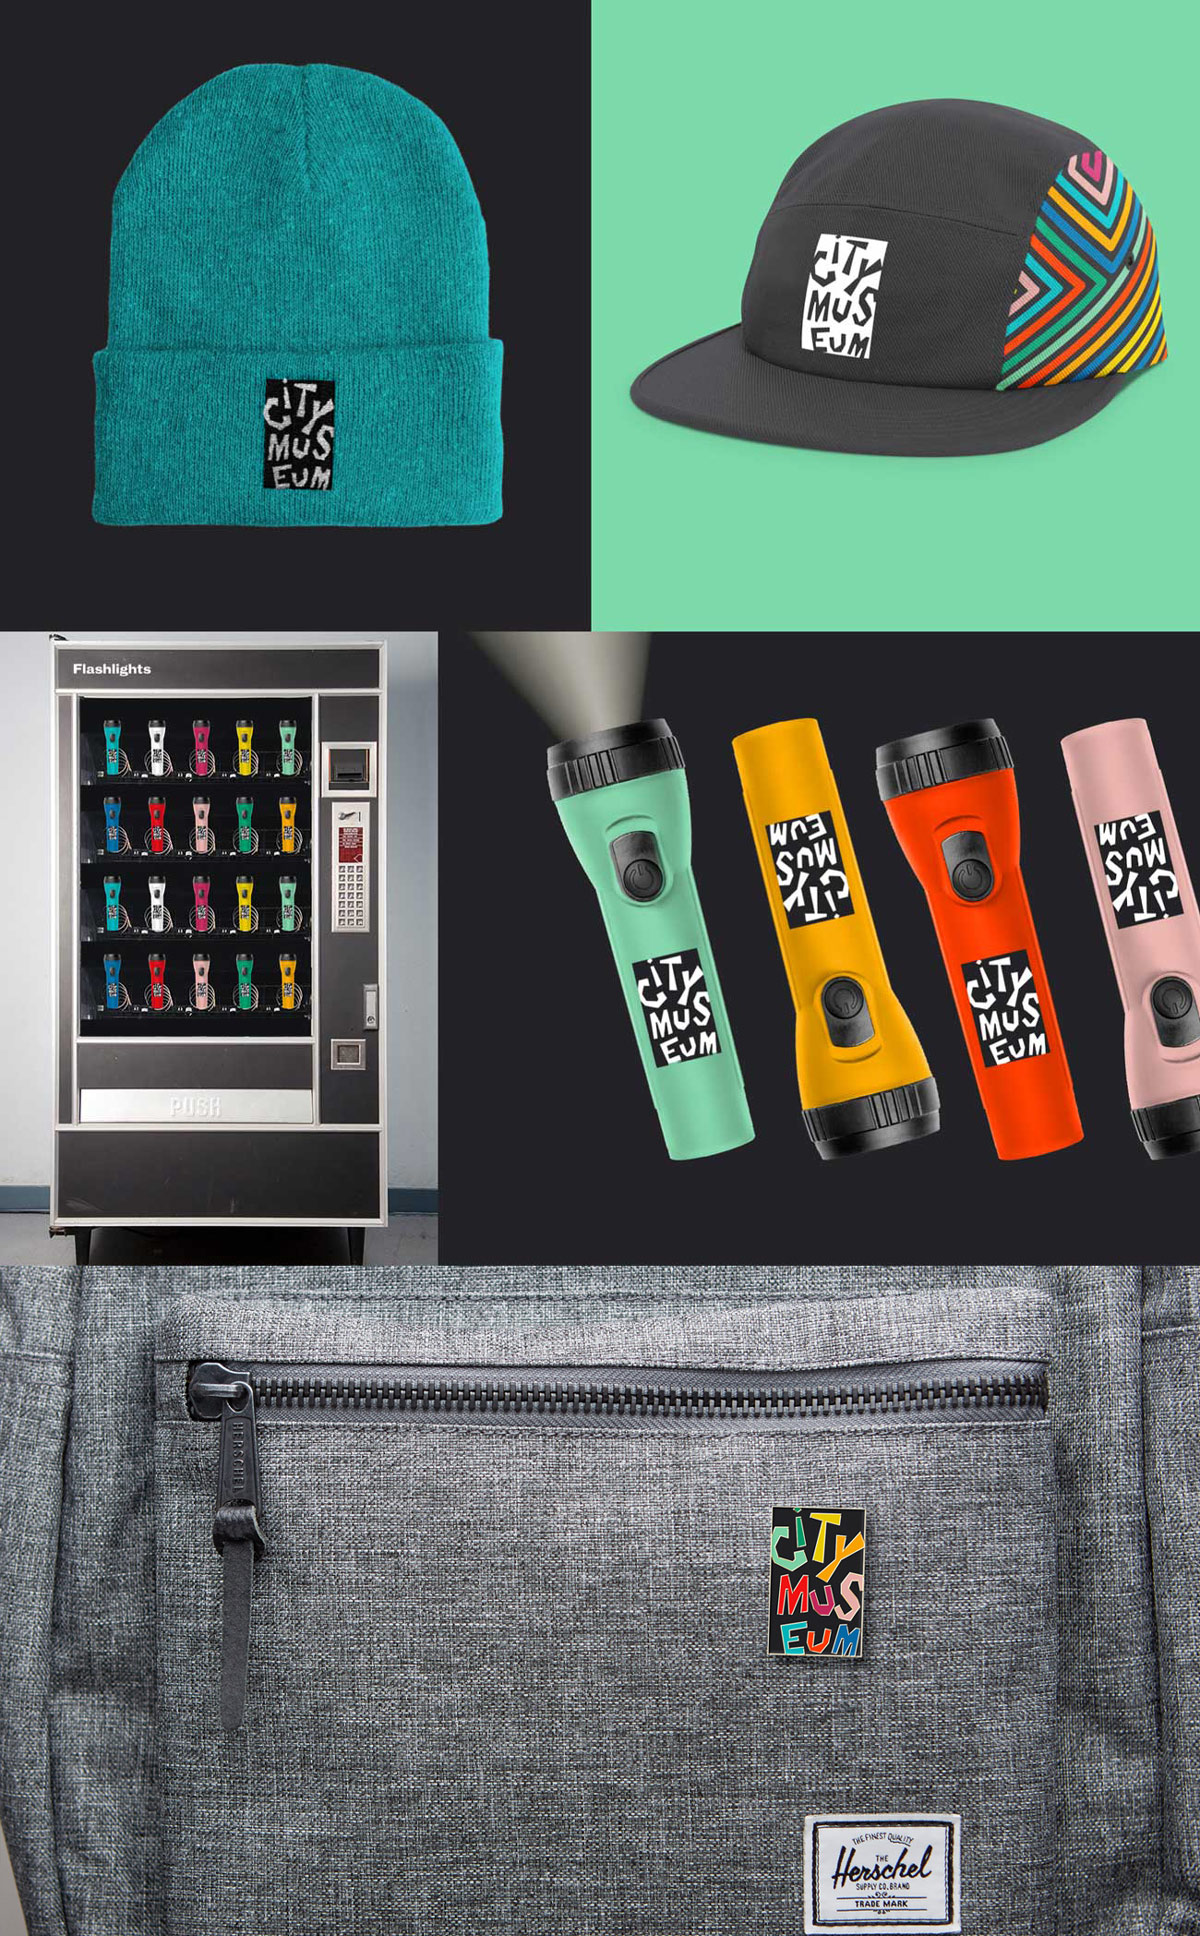 City Museum branding on merch, including a flashlight vending machine, hats and enamel pin